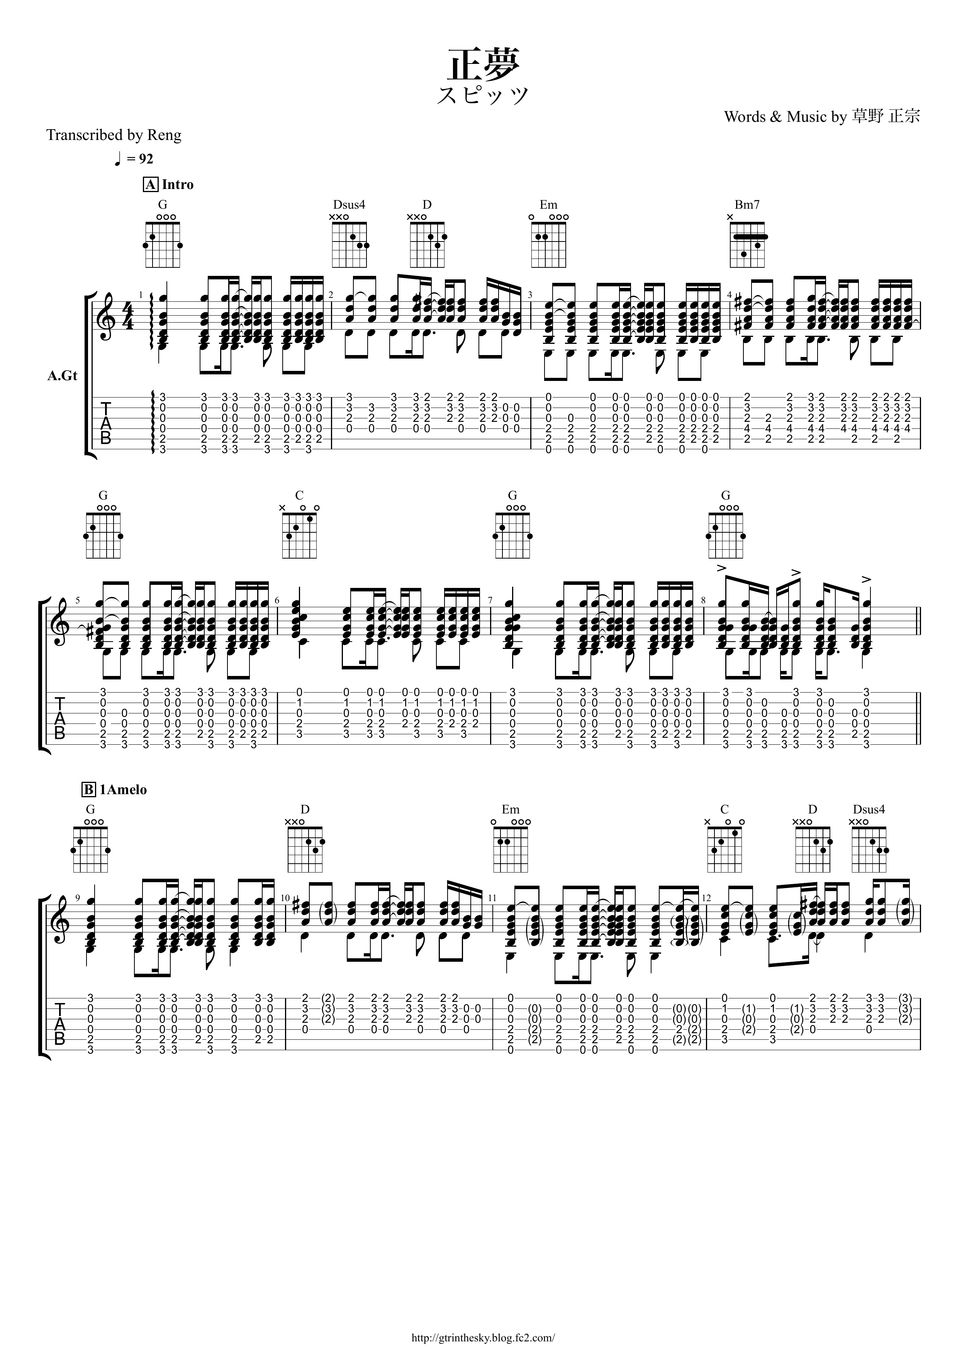 スピッツ - 正夢 (A.Gt/TAB譜) by Score by Reng